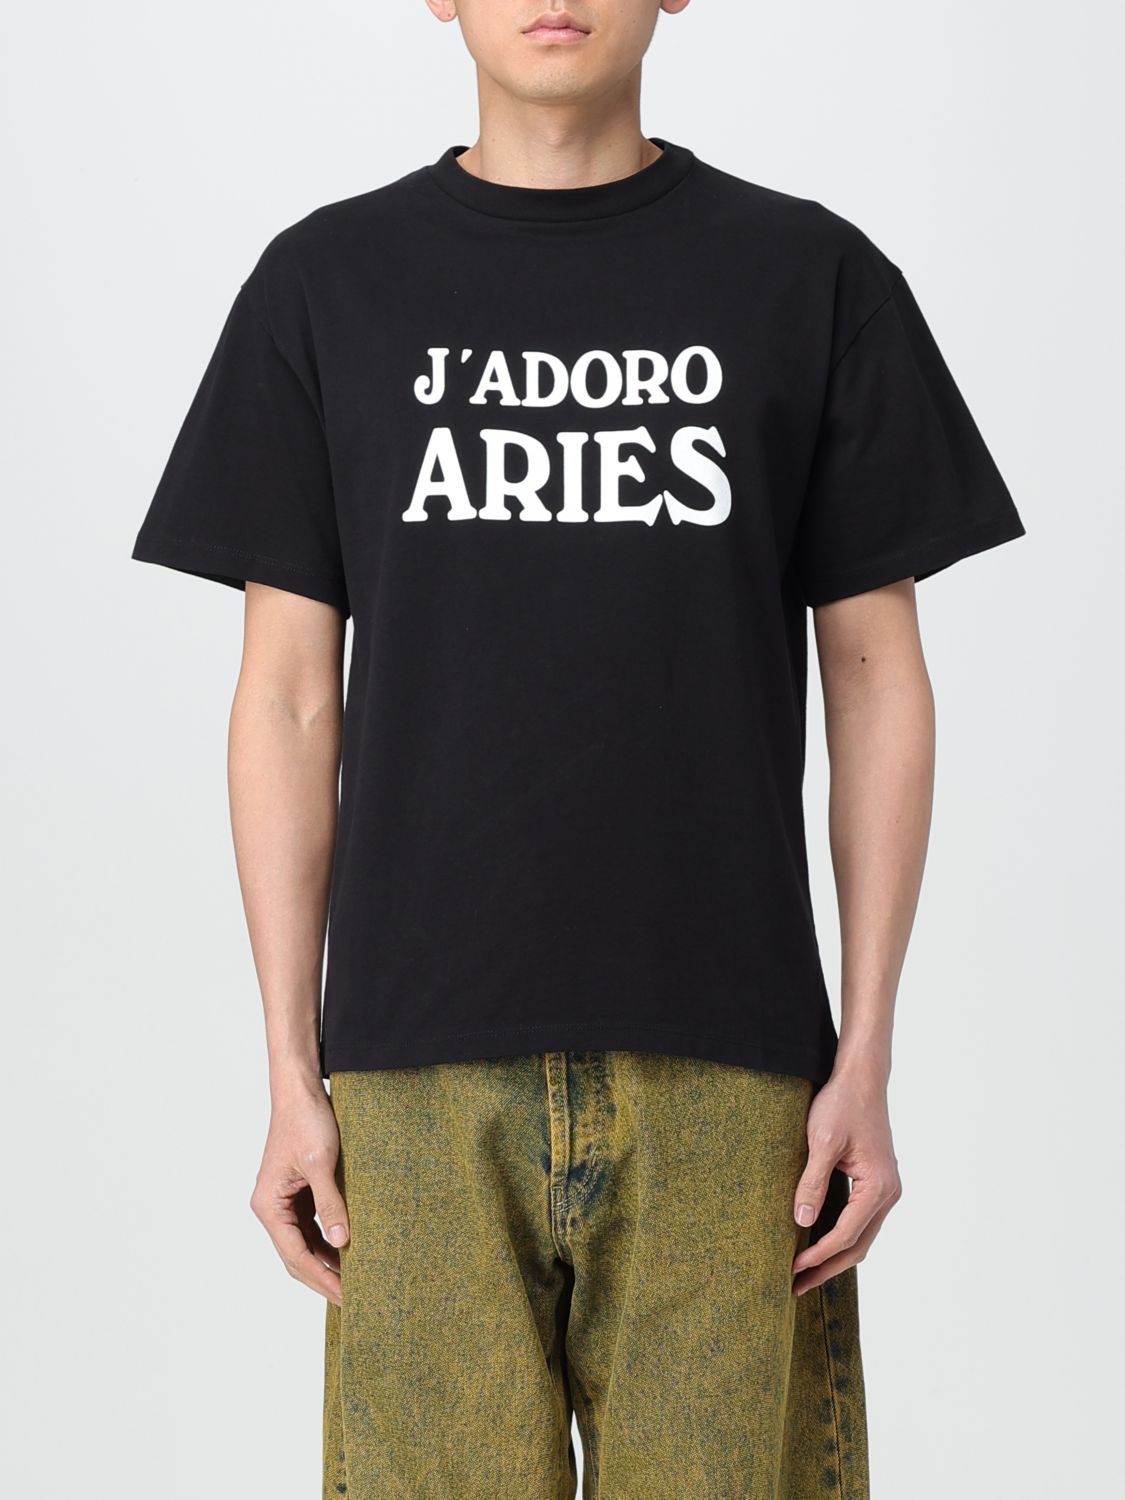 Aries J'adoro  短袖t恤 In Black